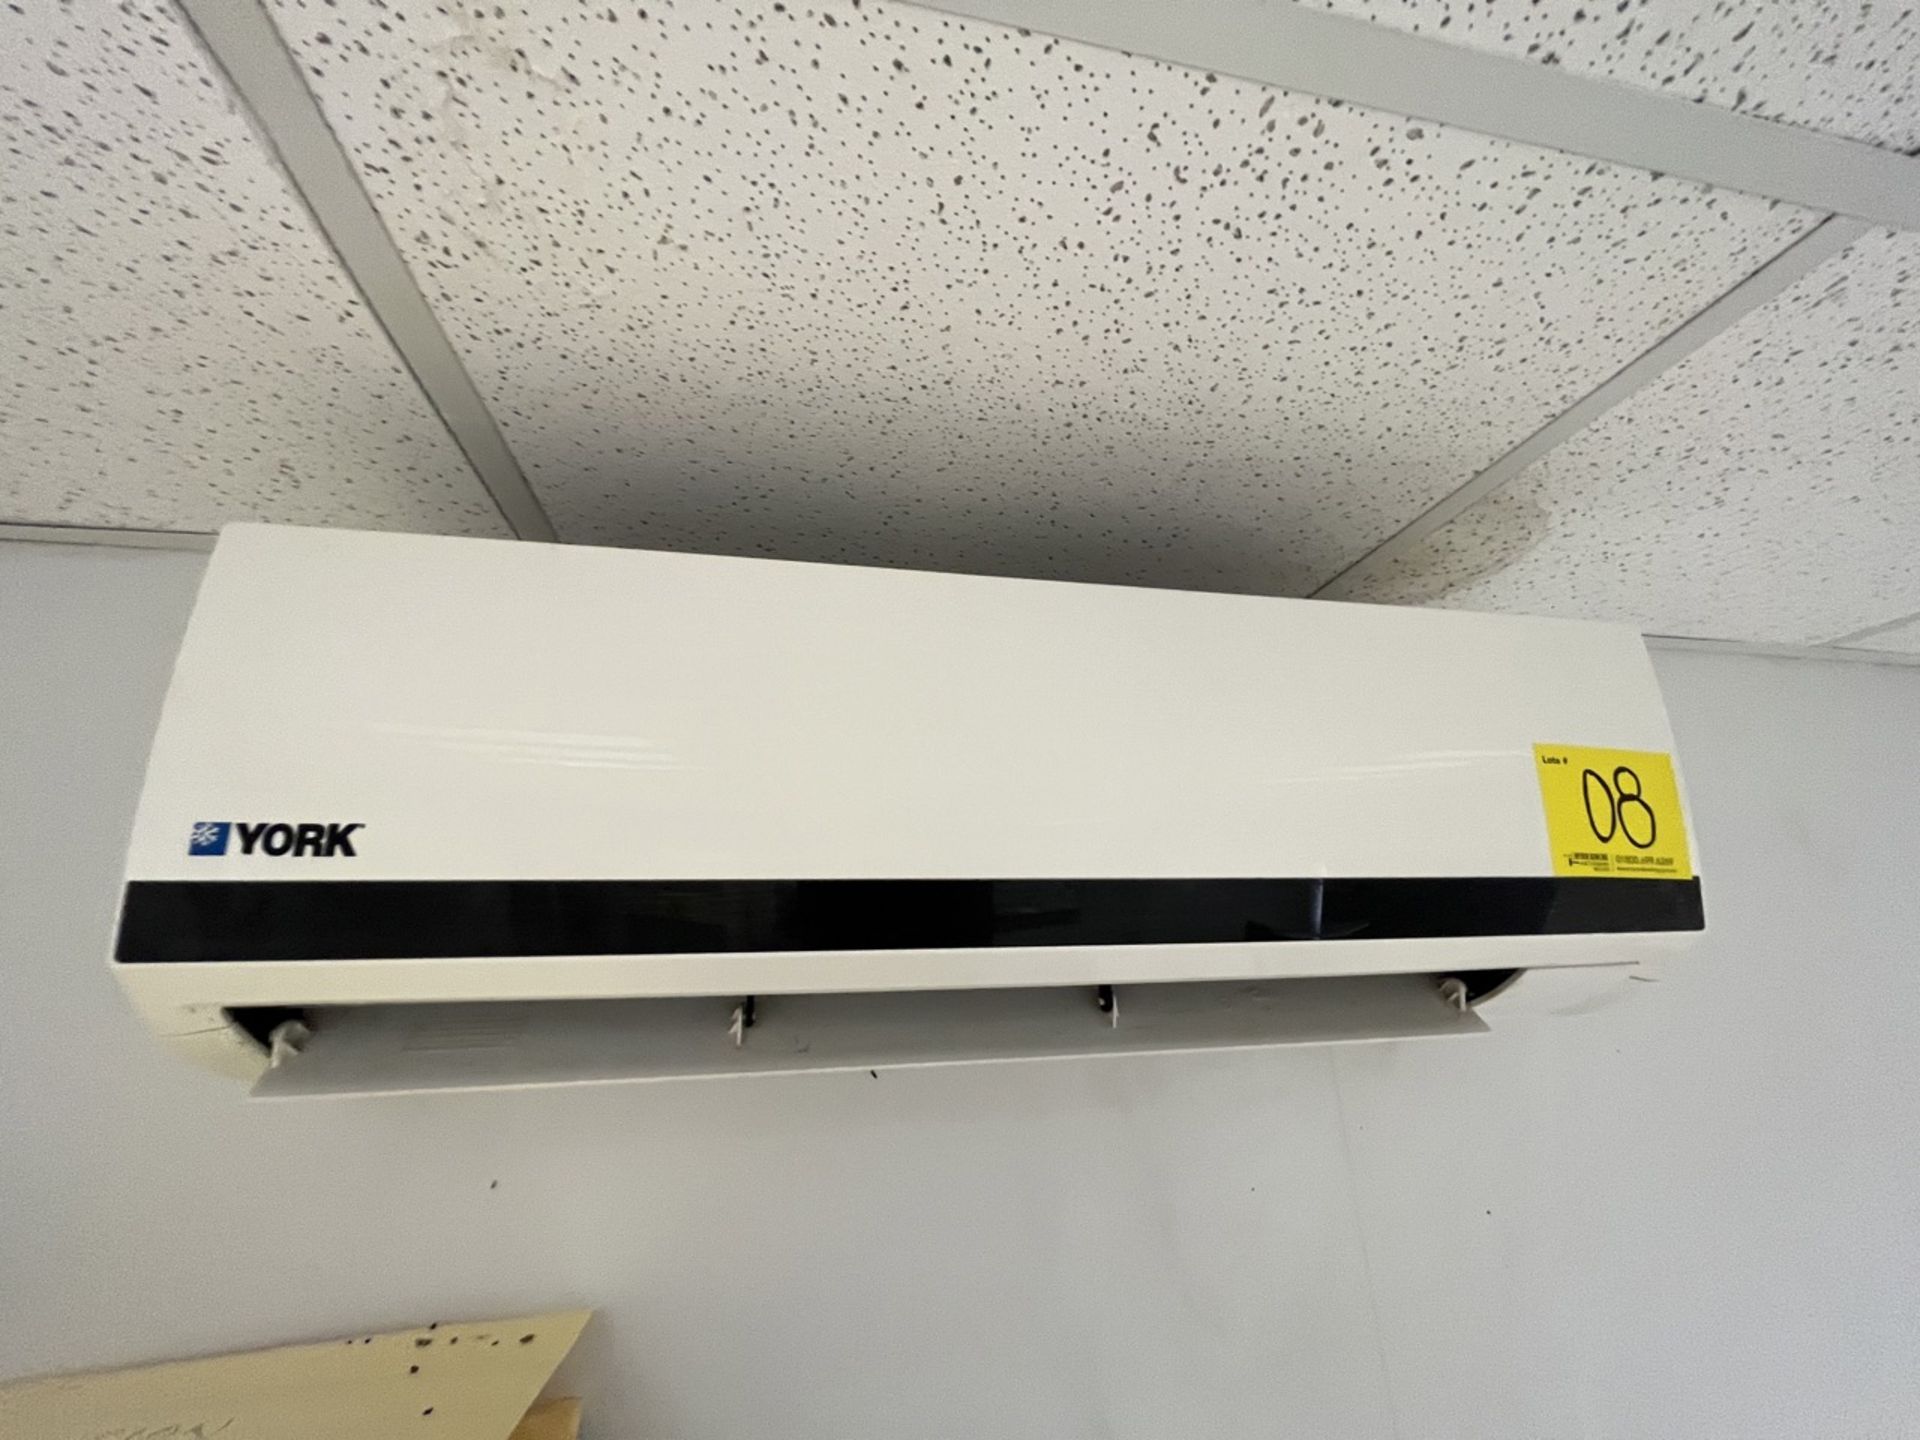 York minisplit air conditioner with control, Model YSEA12FS-ADK, Series 100001010140290131, 220 Vol - Image 8 of 14